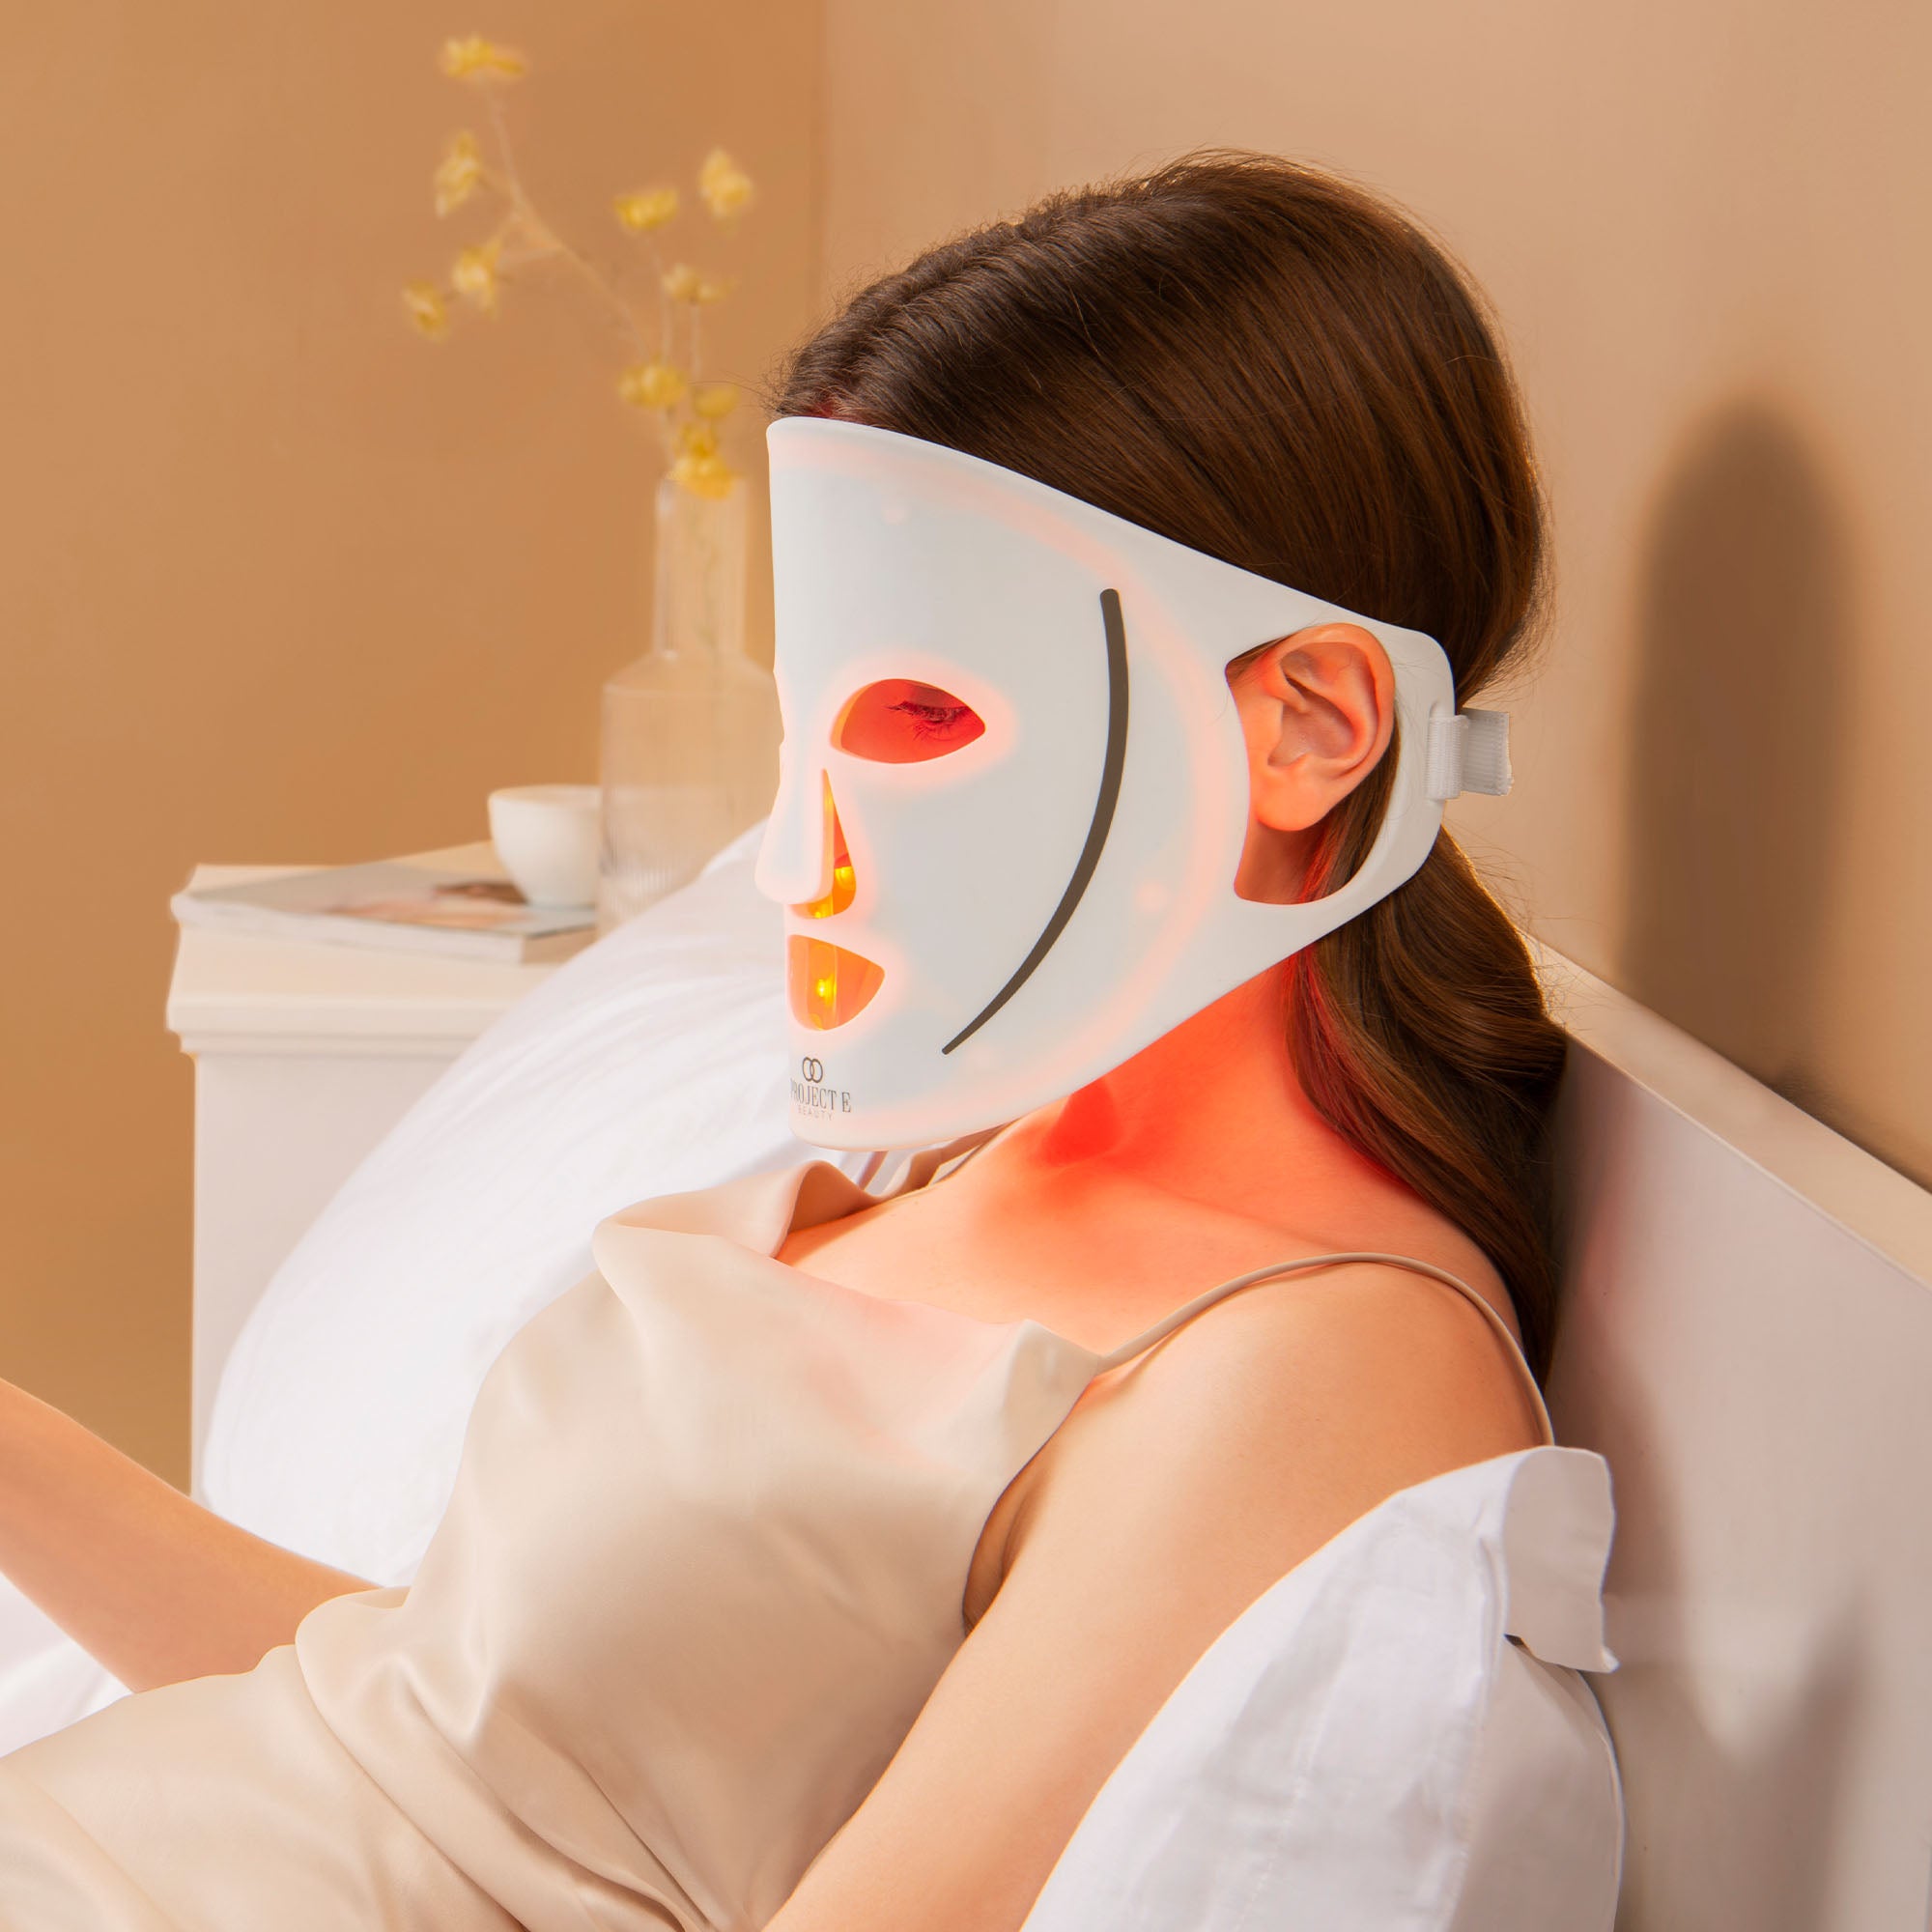 LightAura Flex | LED Face Mask - Project E Beauty